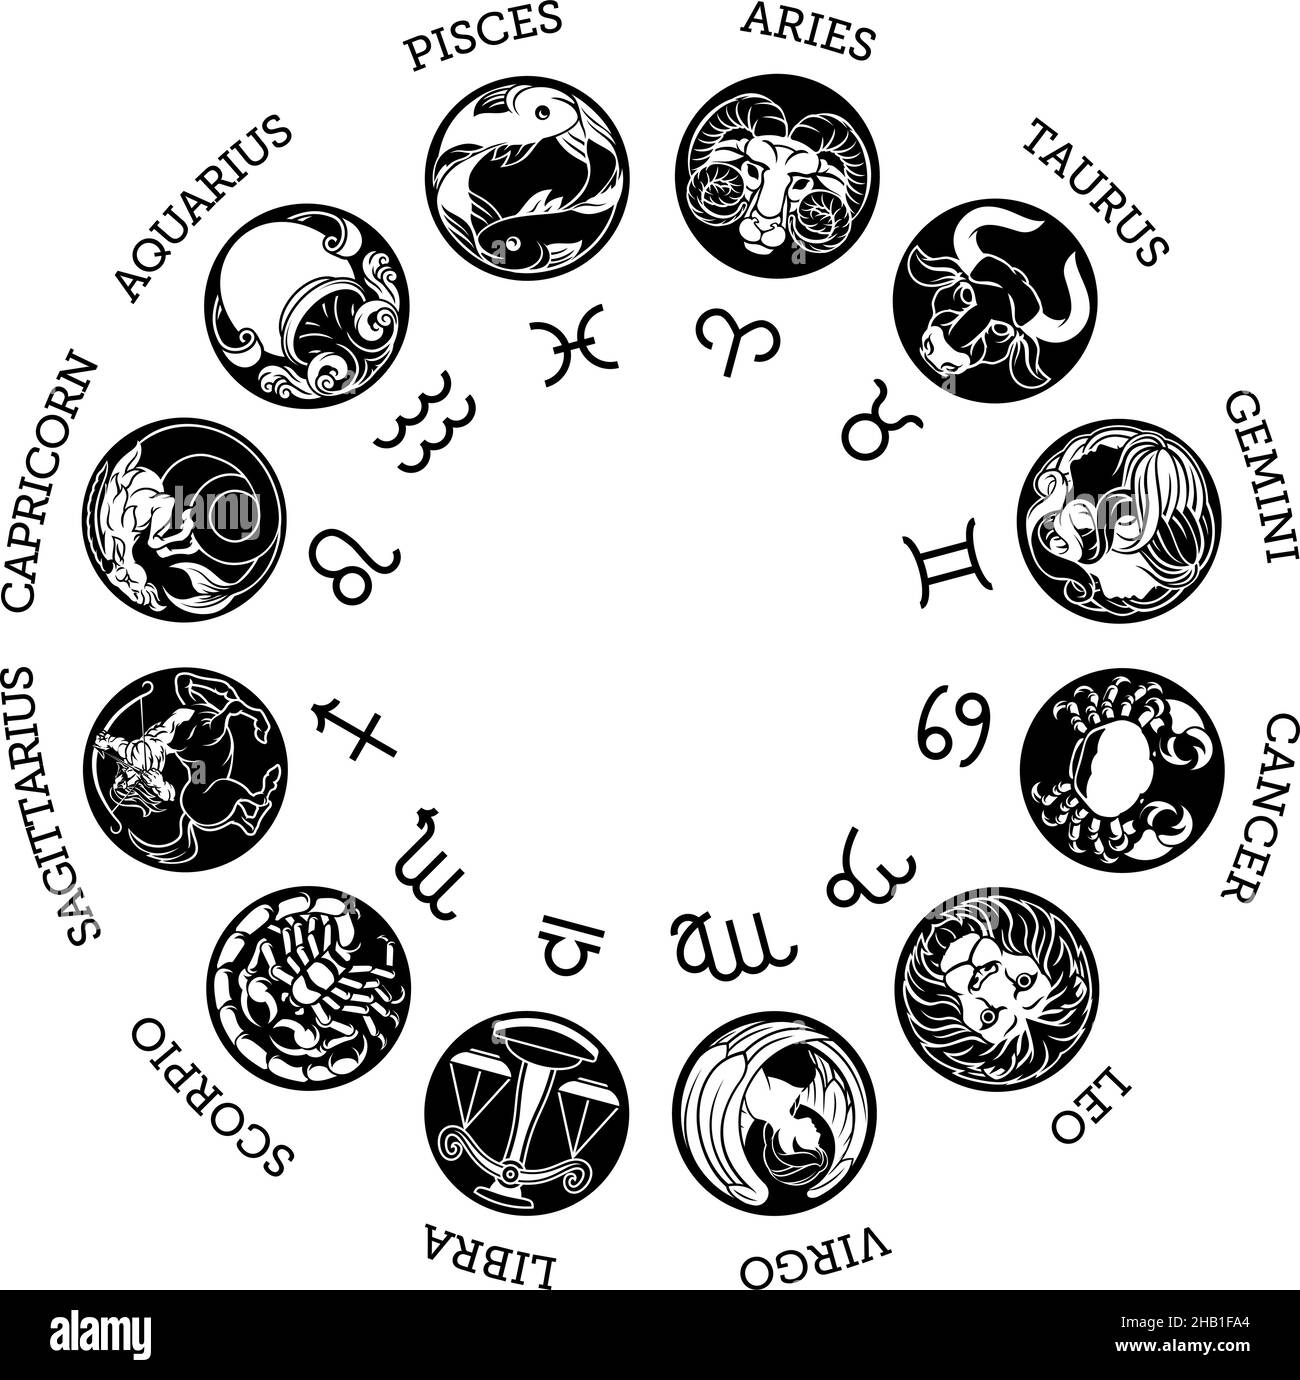 Astrology zodiac horoscope star signs icon set Stock Vector